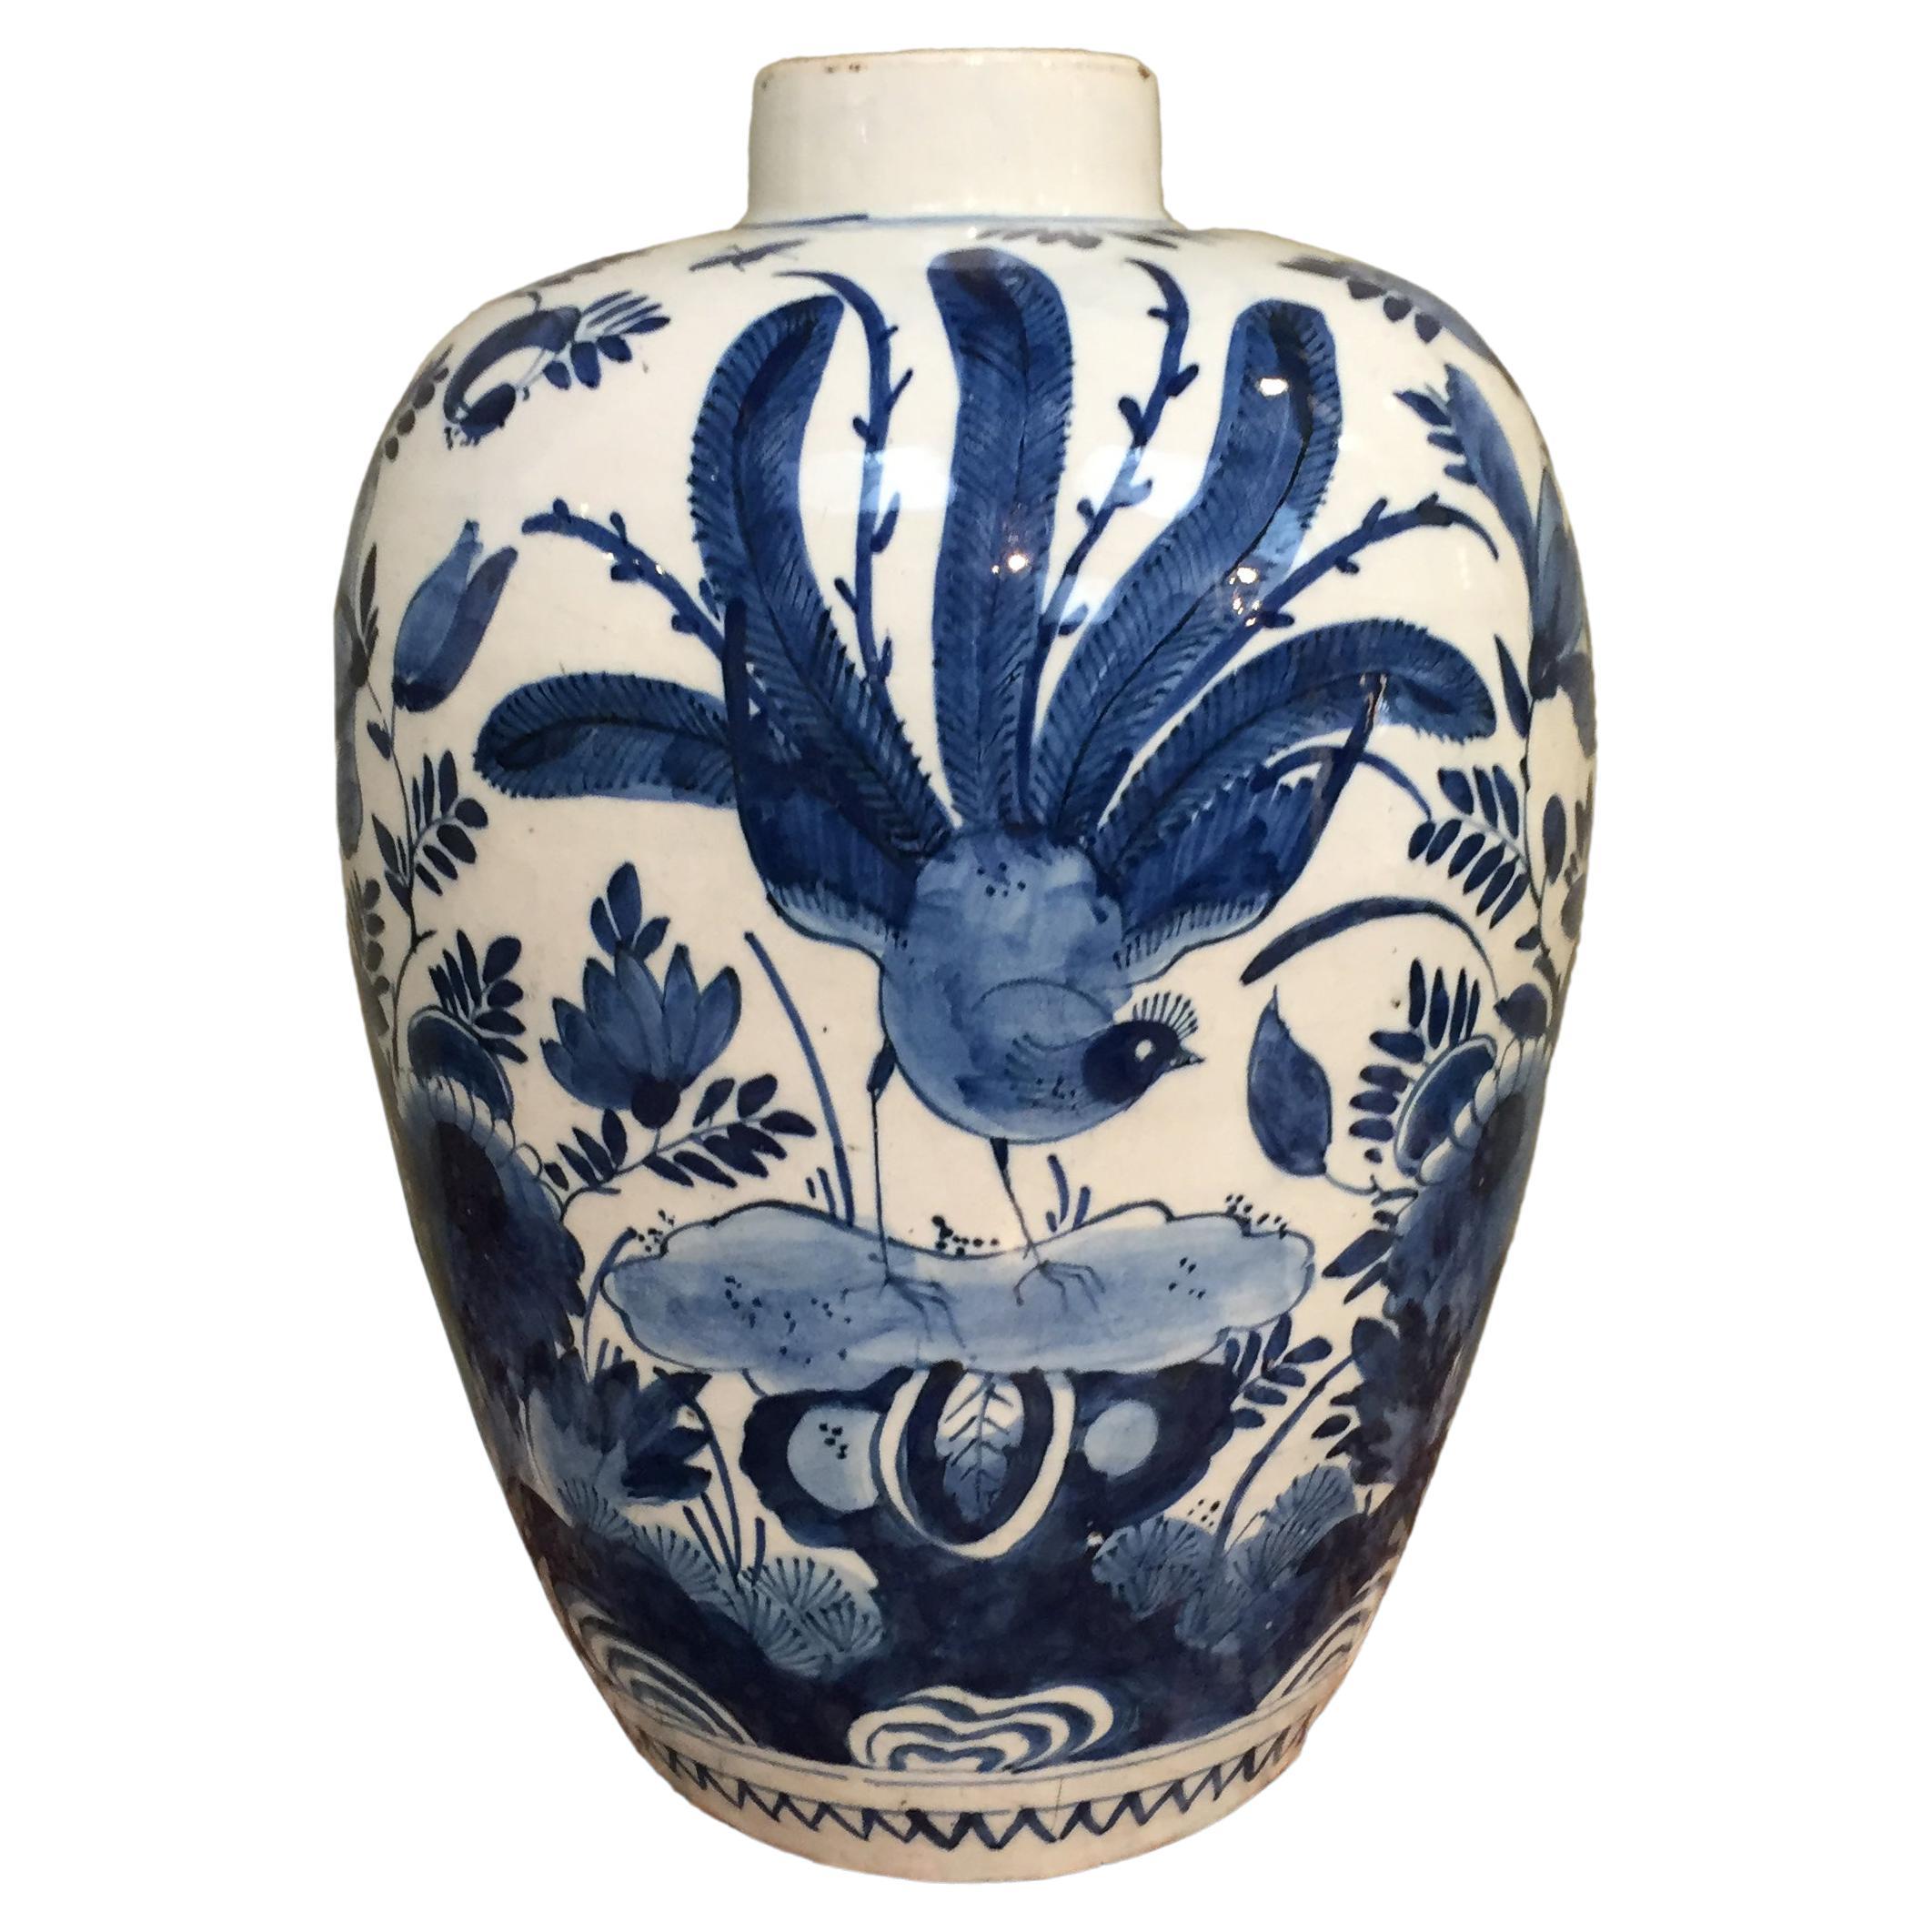 18th century Dutch Delft Vase with Peacock